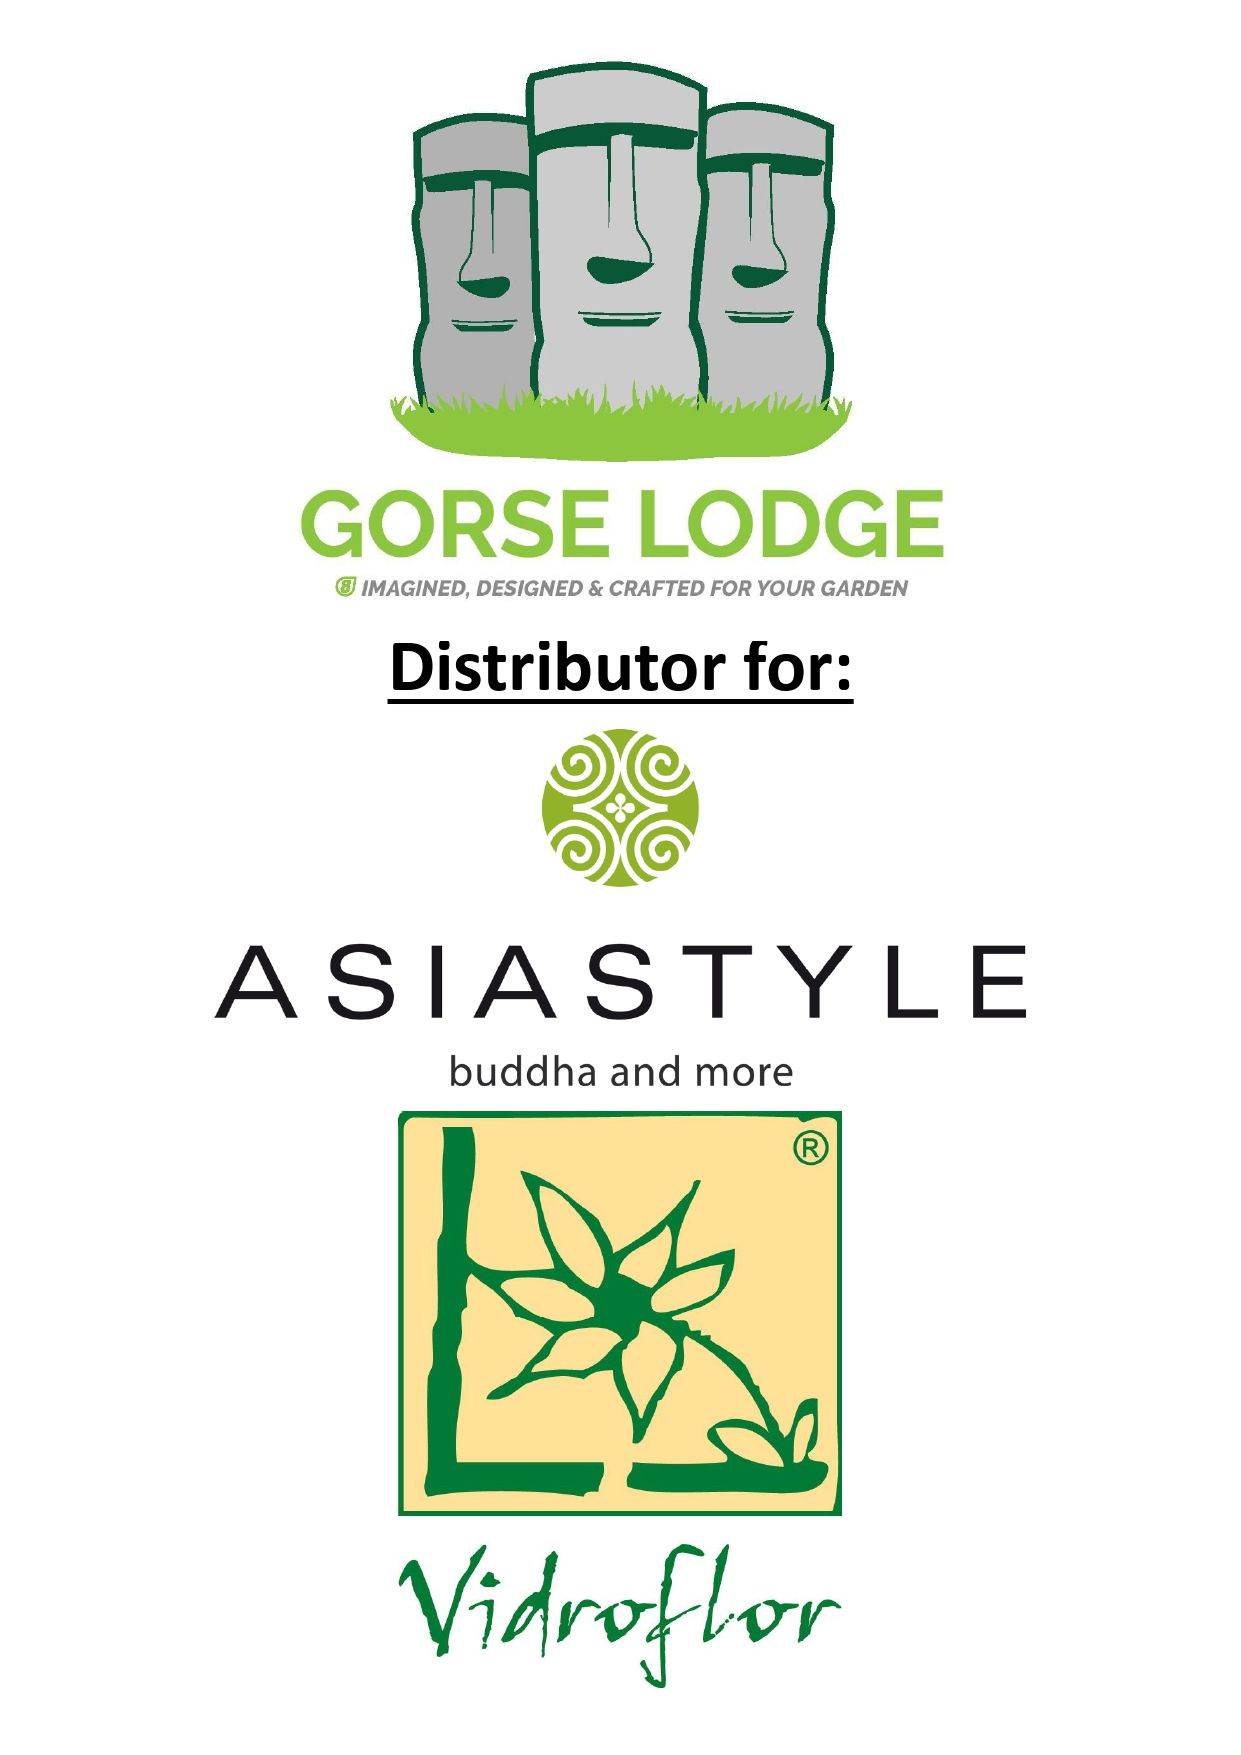 Gorse Lodge Ltd